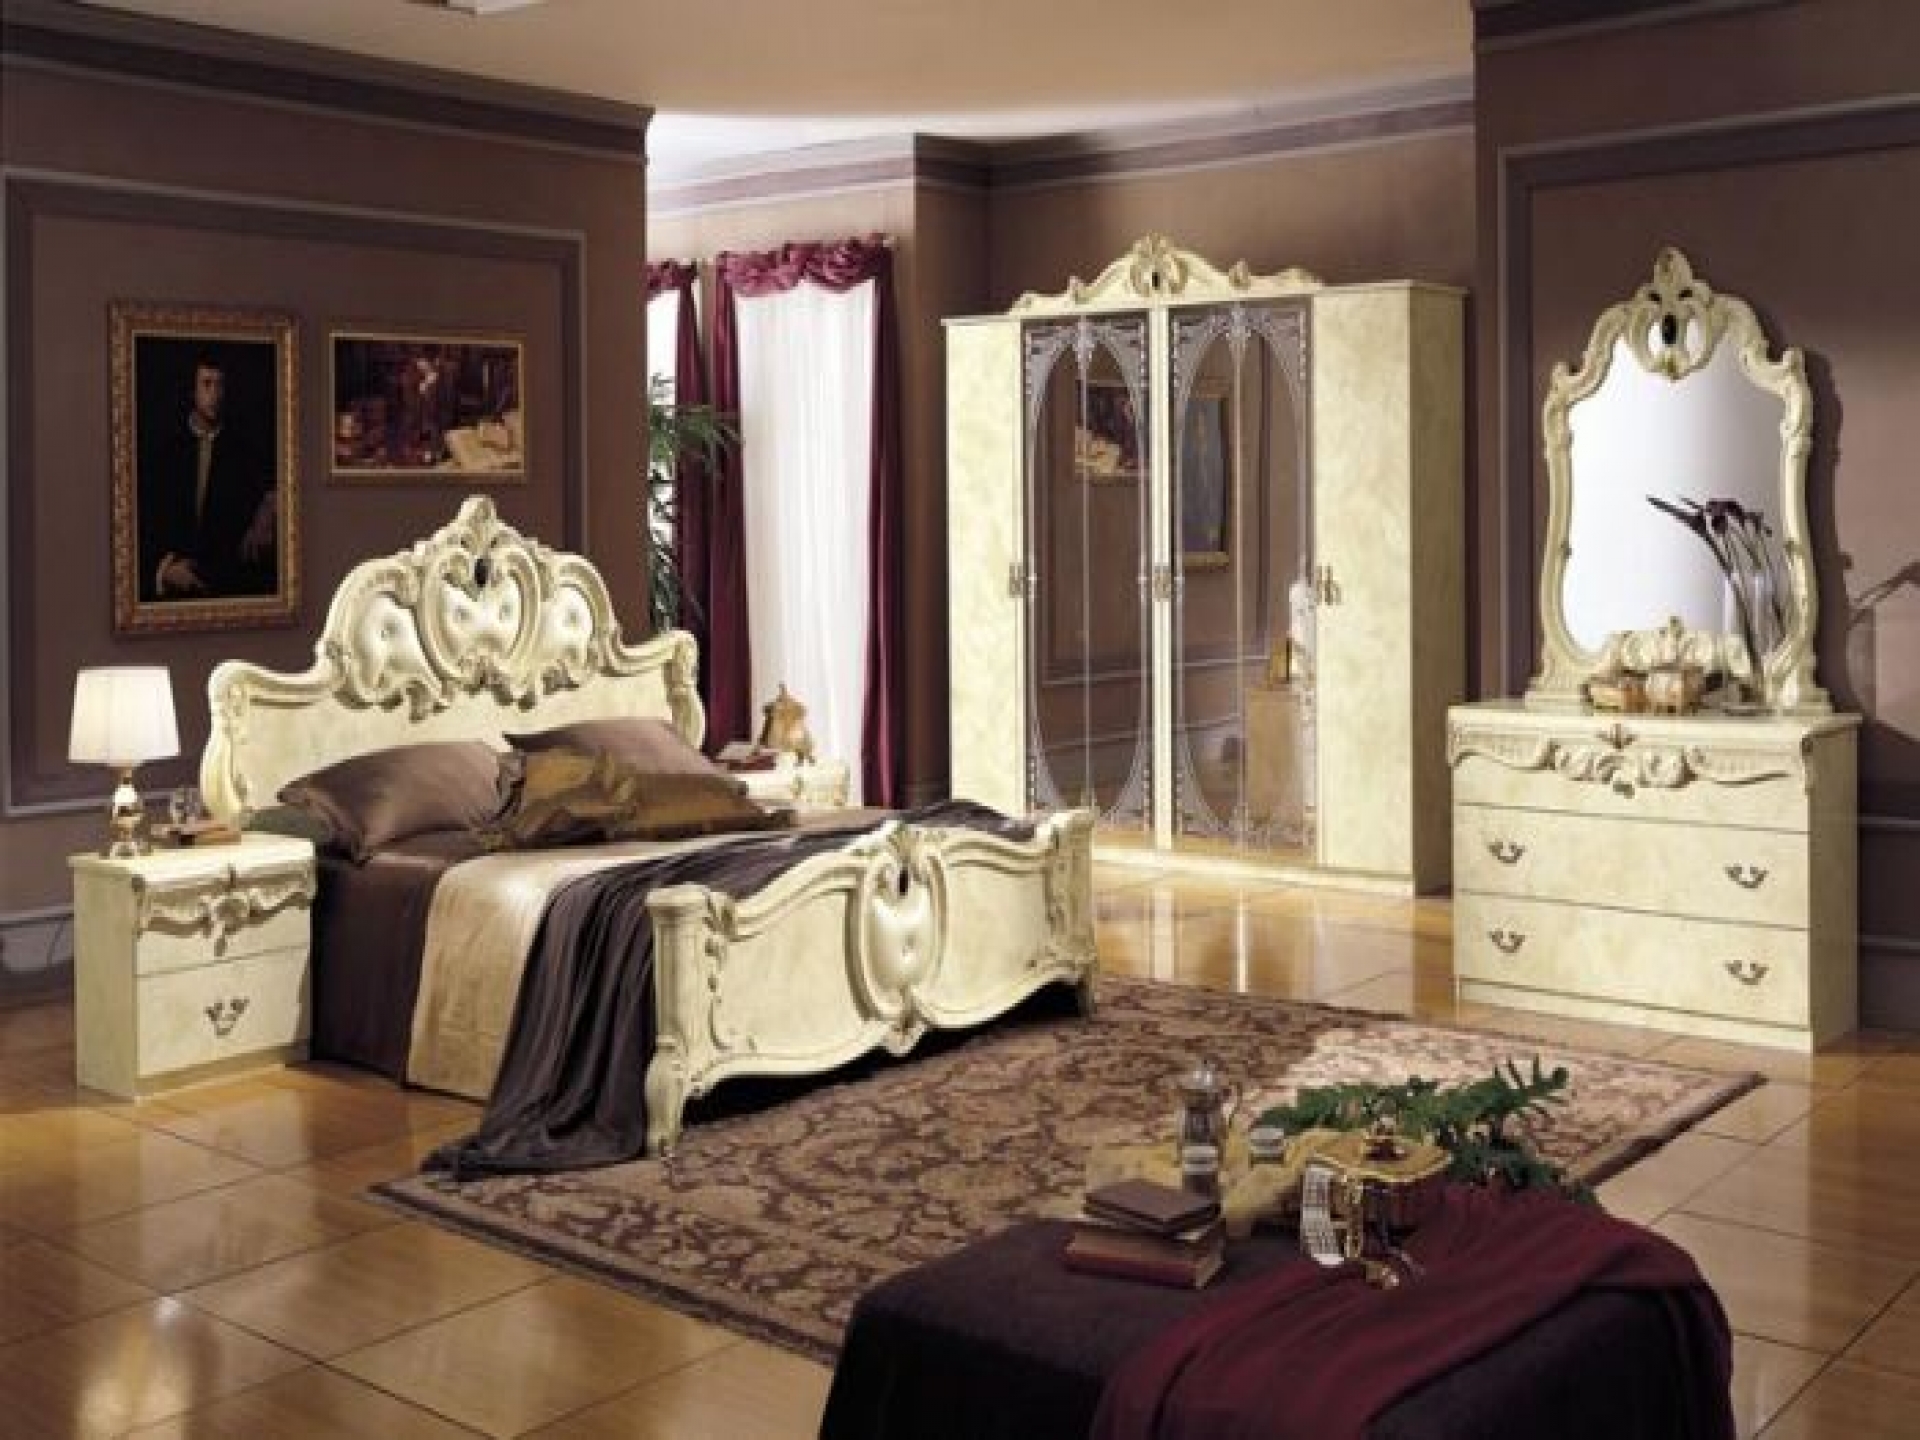 Home Design and Interior Design Gallery of Glamorous New York Baroque Style Interior Design1